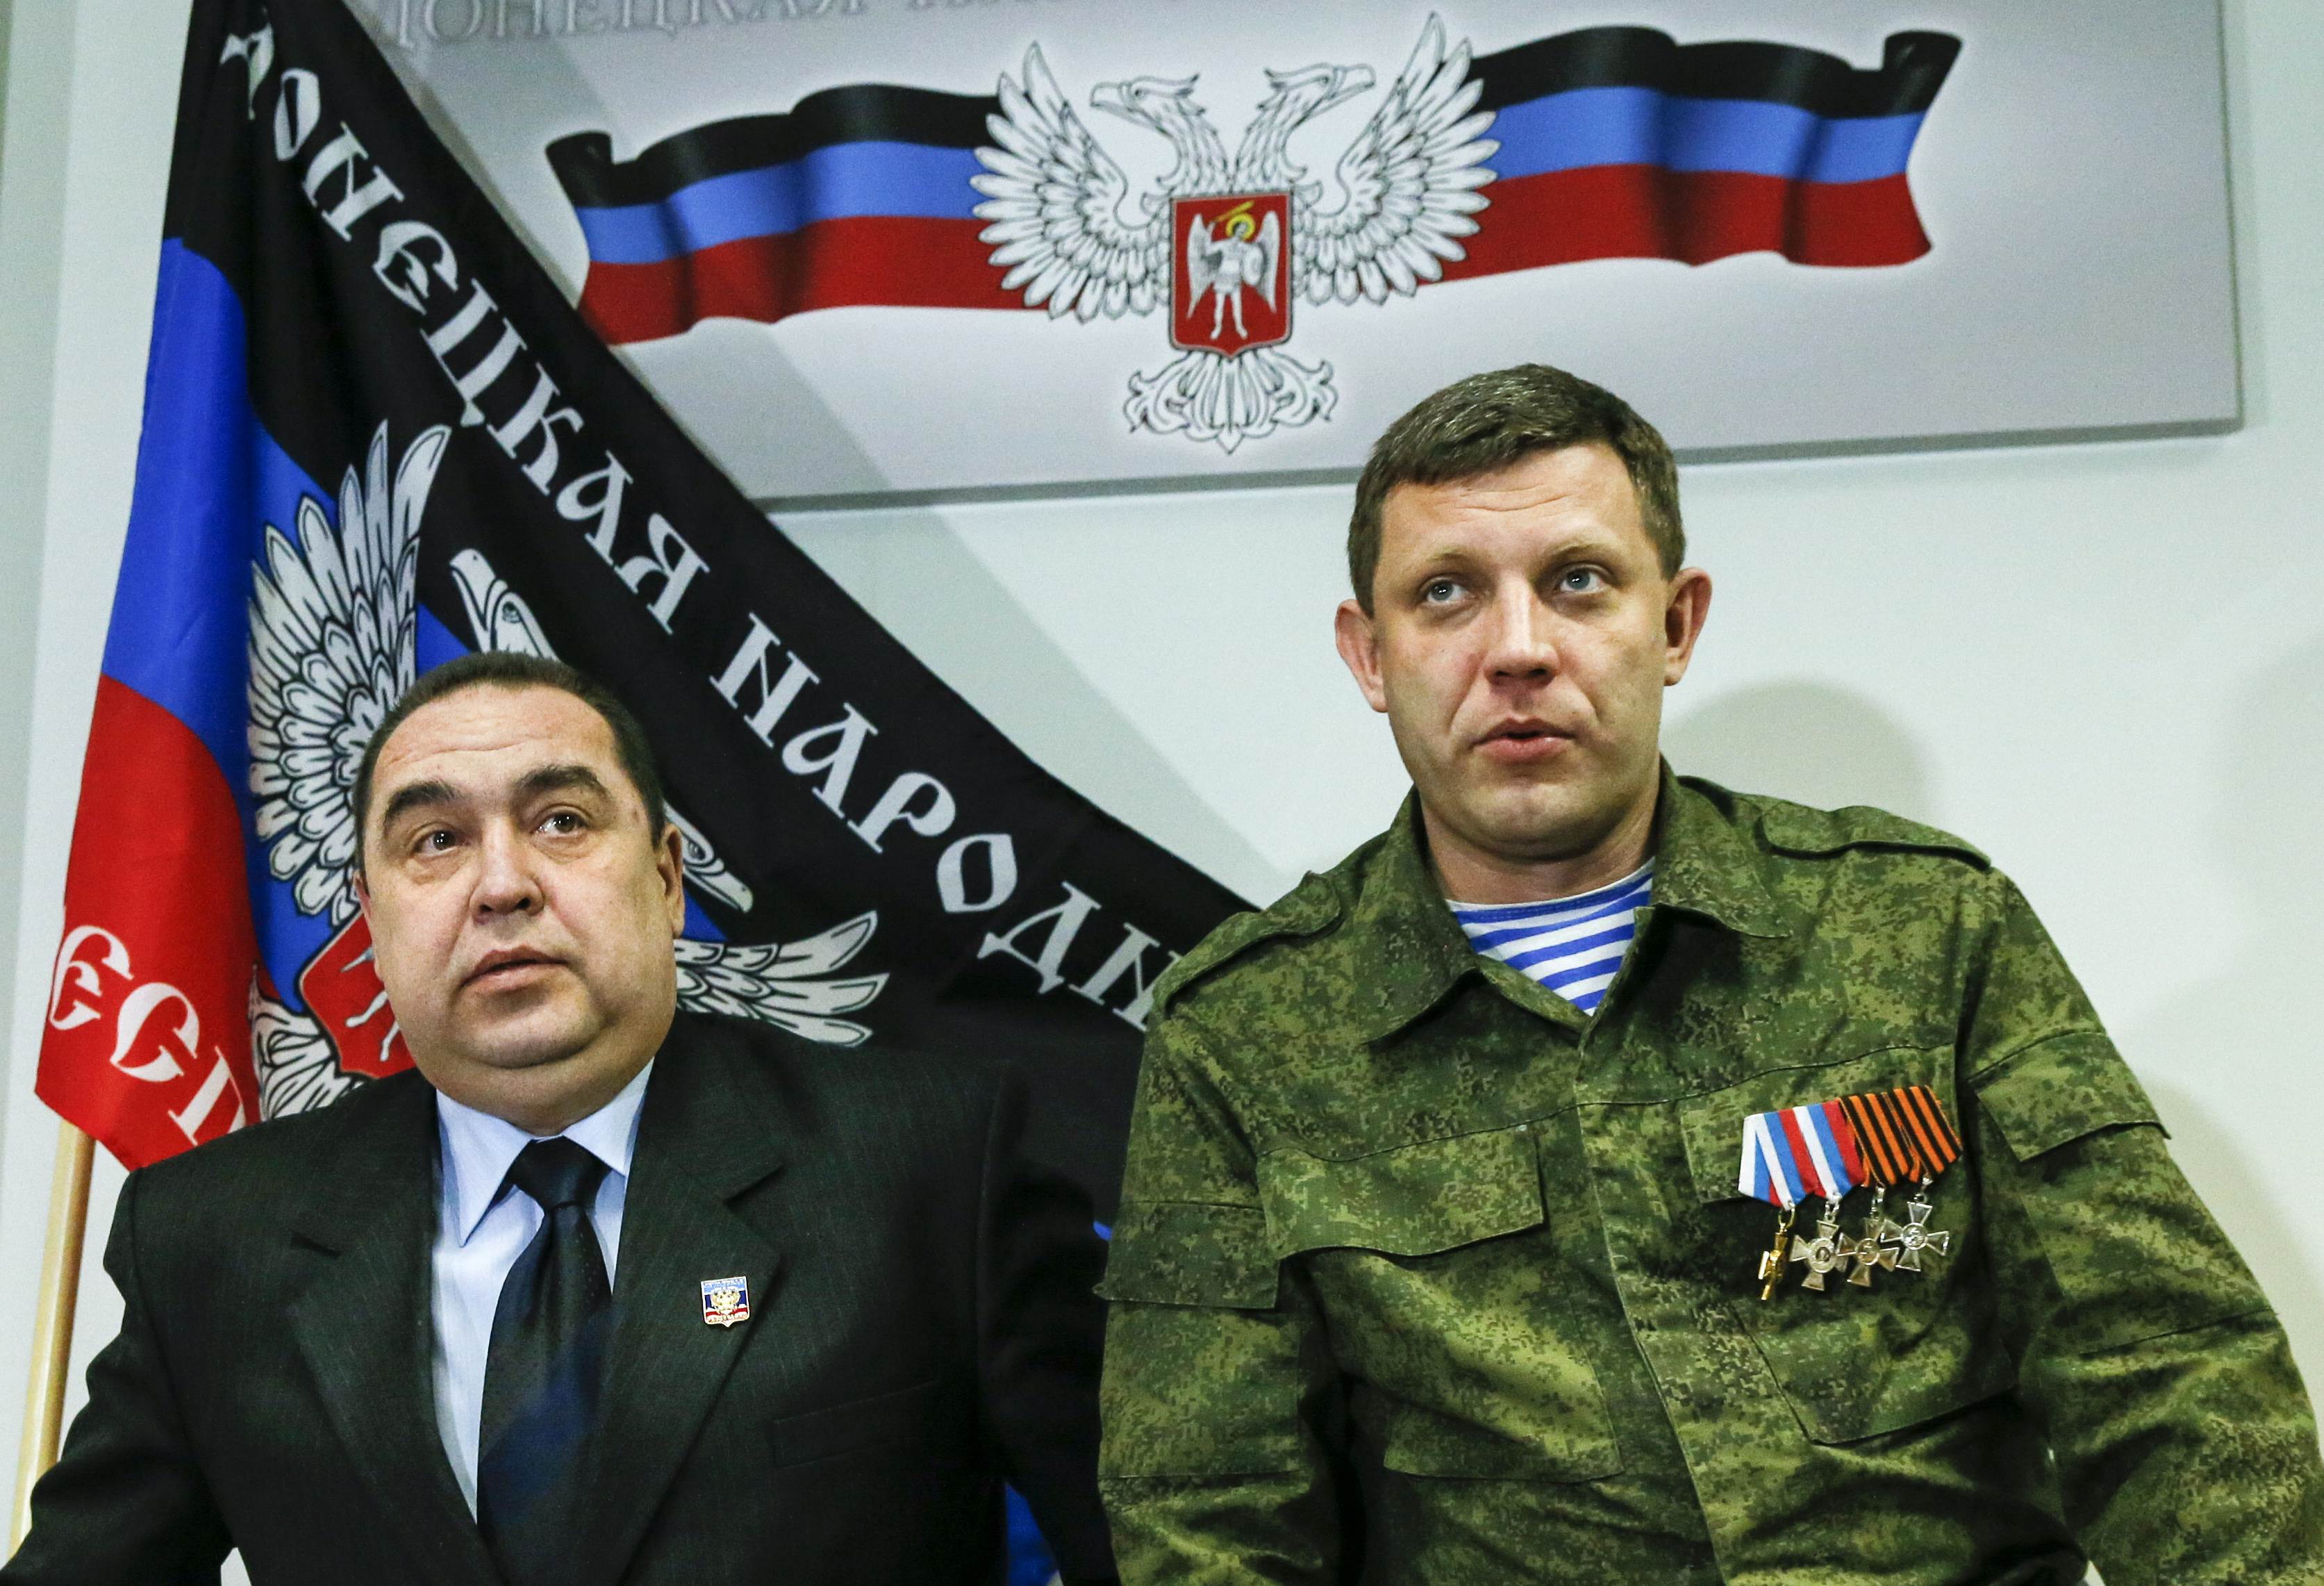 A sinistra Igor Plotnitsky, leader della Repubblica Popolare di Luhansk. A destra Alexander Zakharchenko, leader della Repubblica Popolare di Donetsk